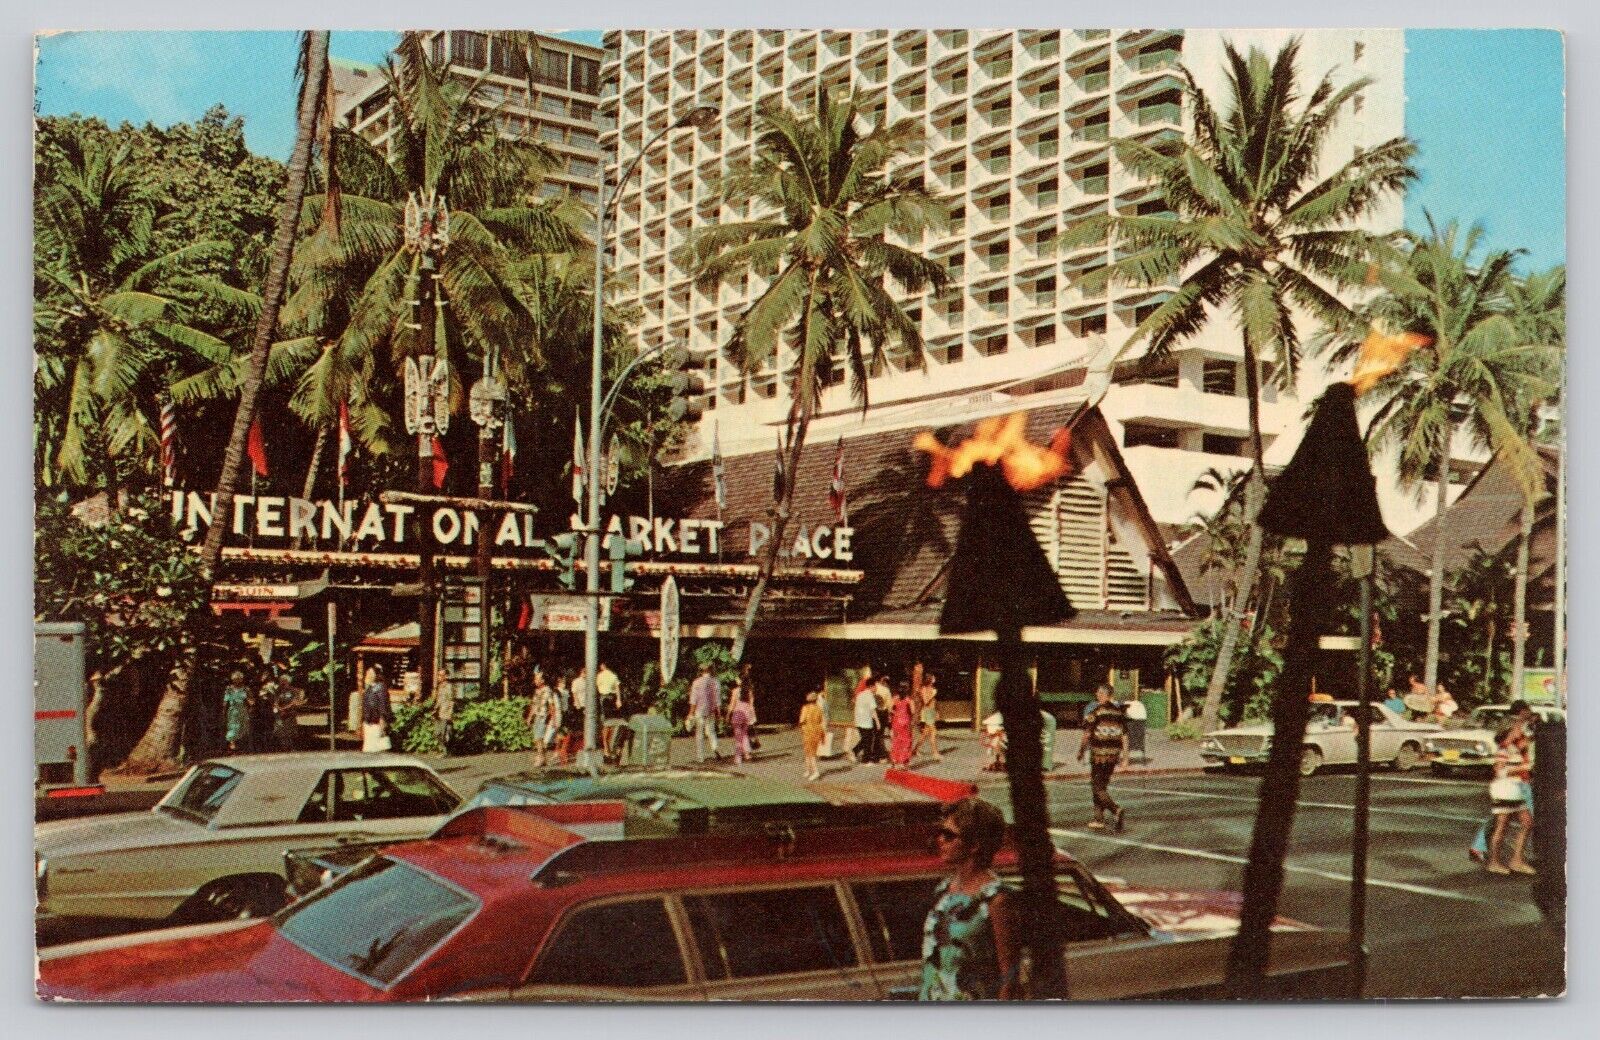 The International market Place Waikiki Beach Honolulu Hawaii Vintage Postcard